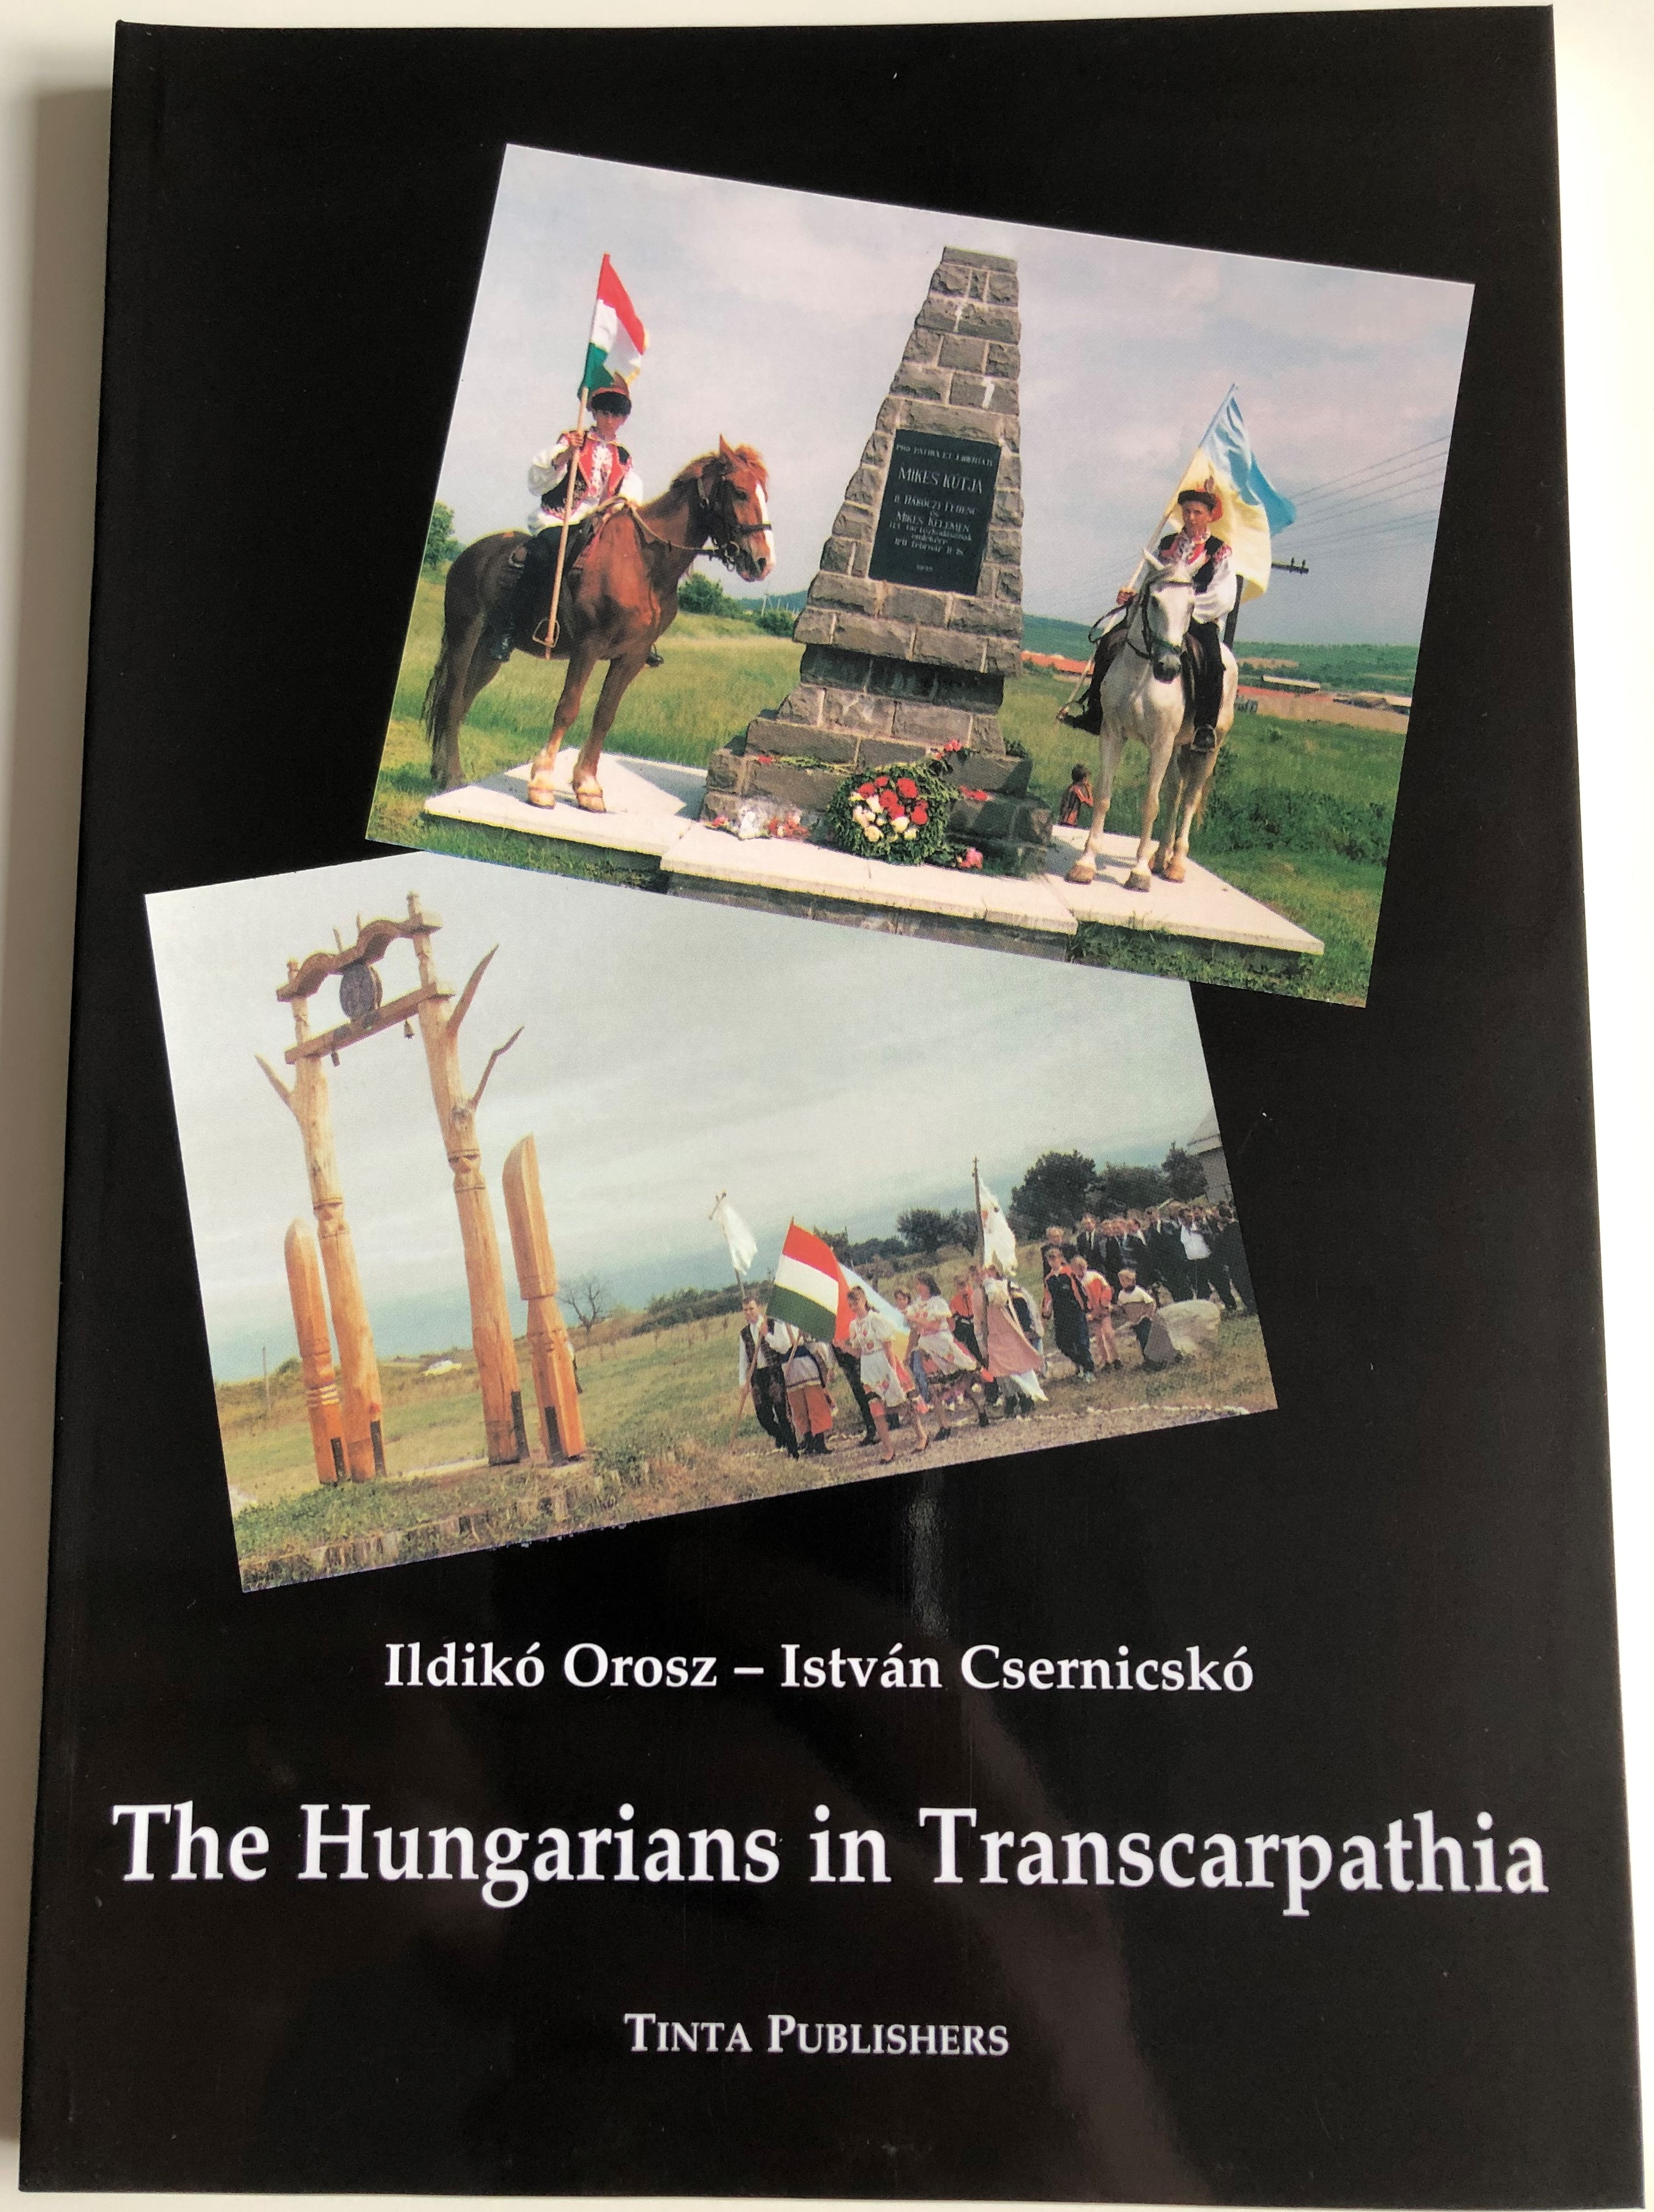 The Hungarians in Transcarpathia by Ildikó Orosz 1